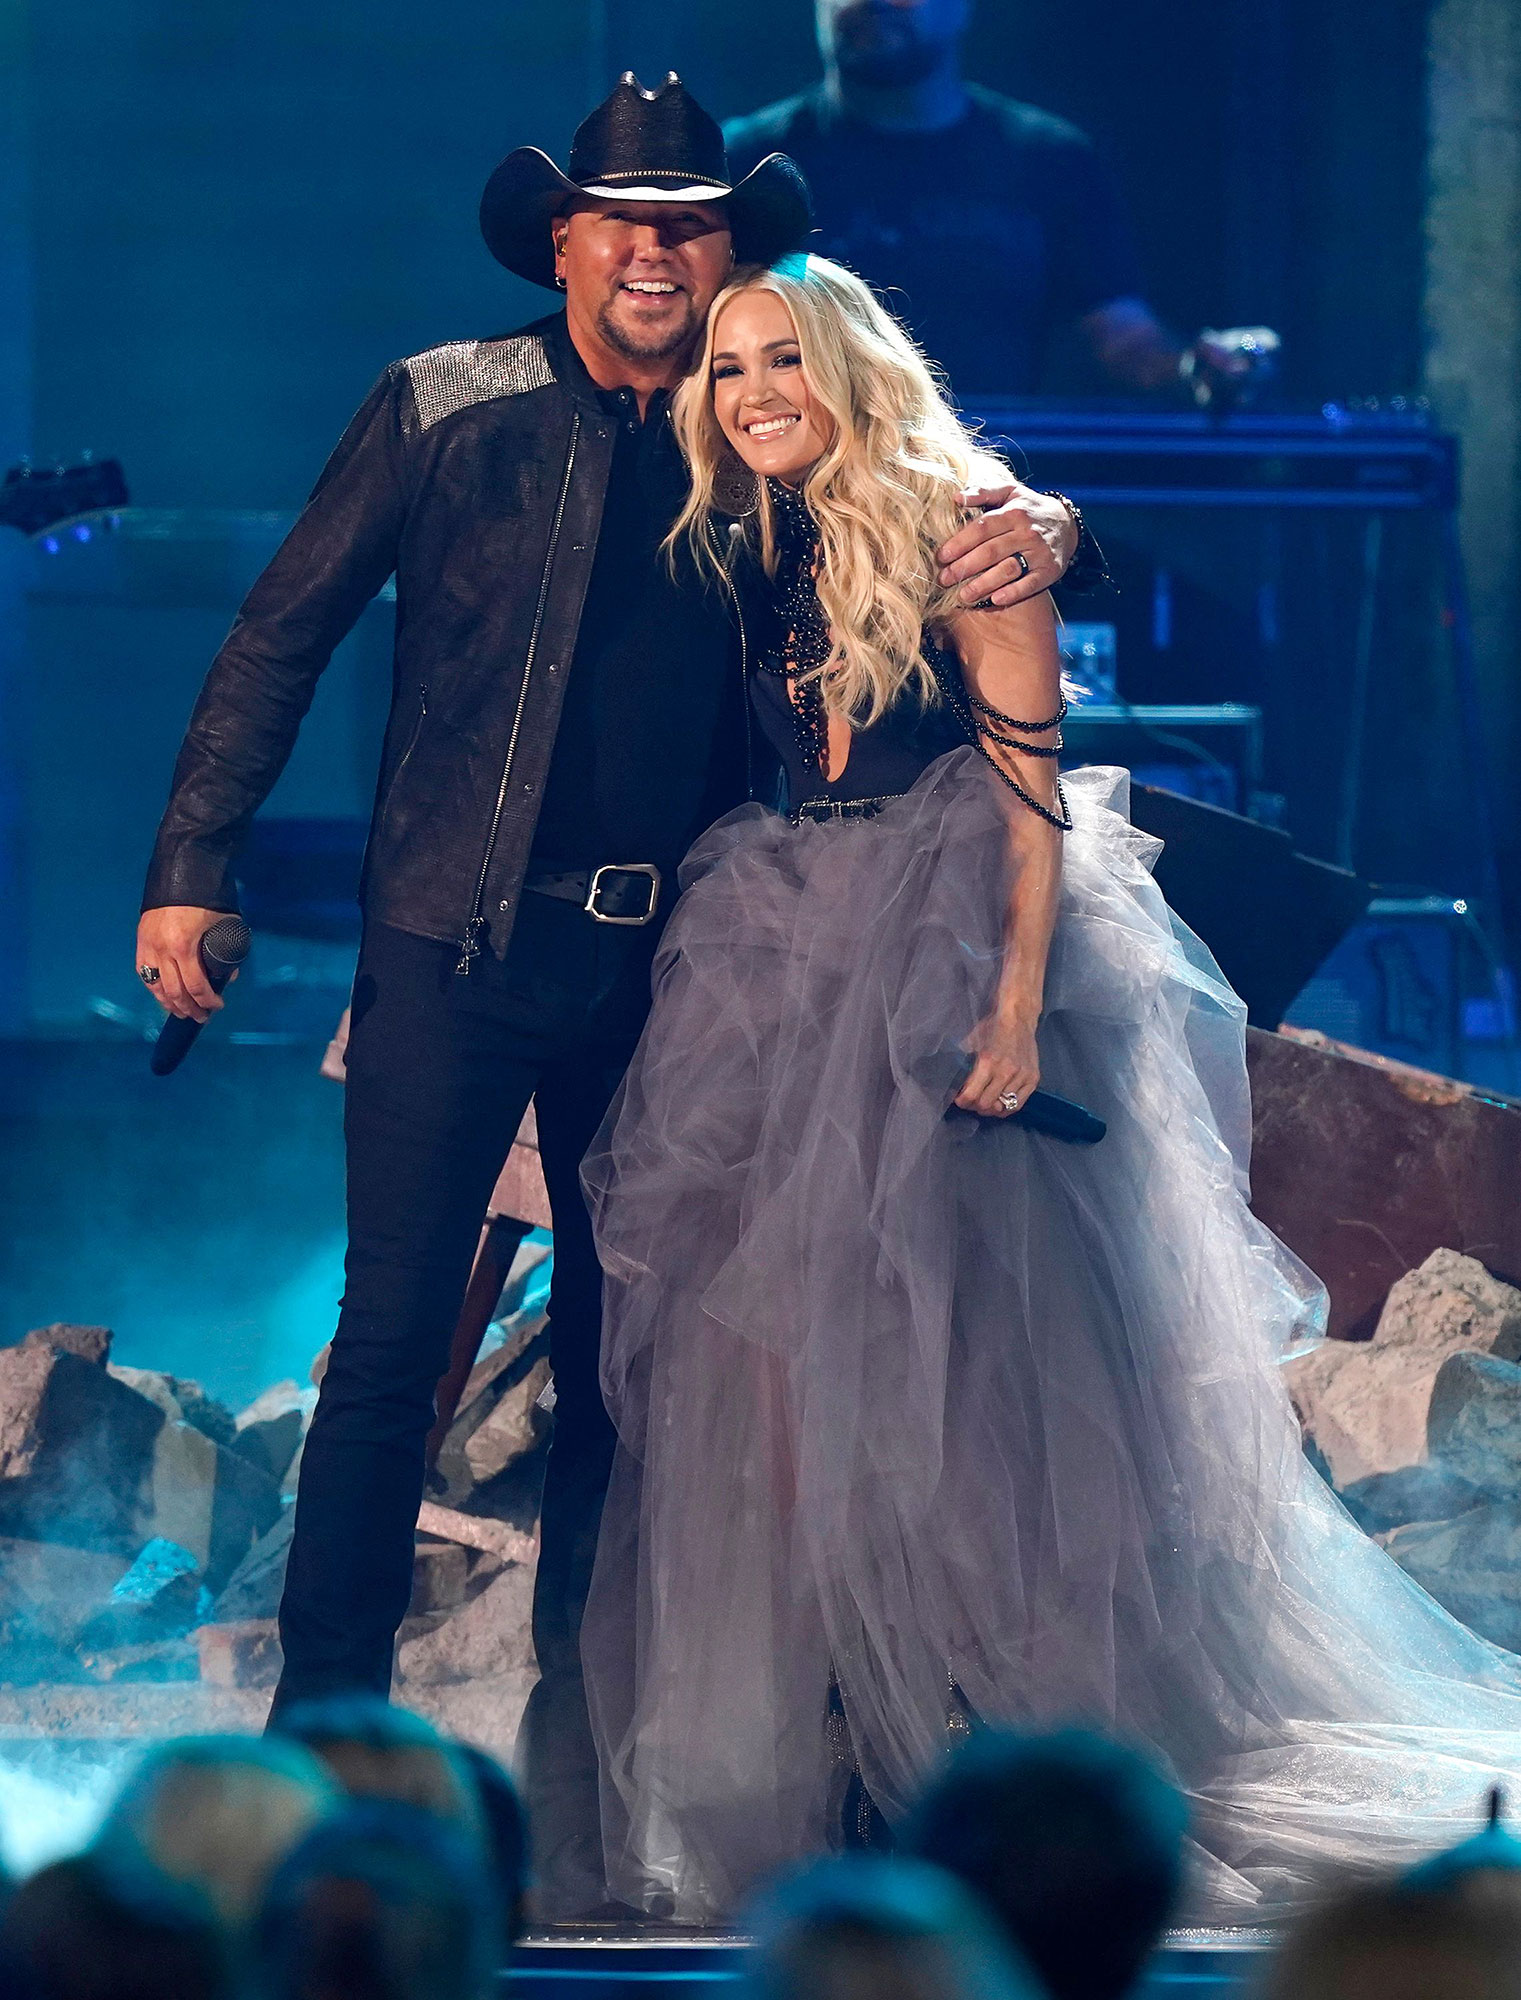 CMAs 2021: Carrie Underwood Duets With Jason Aldean